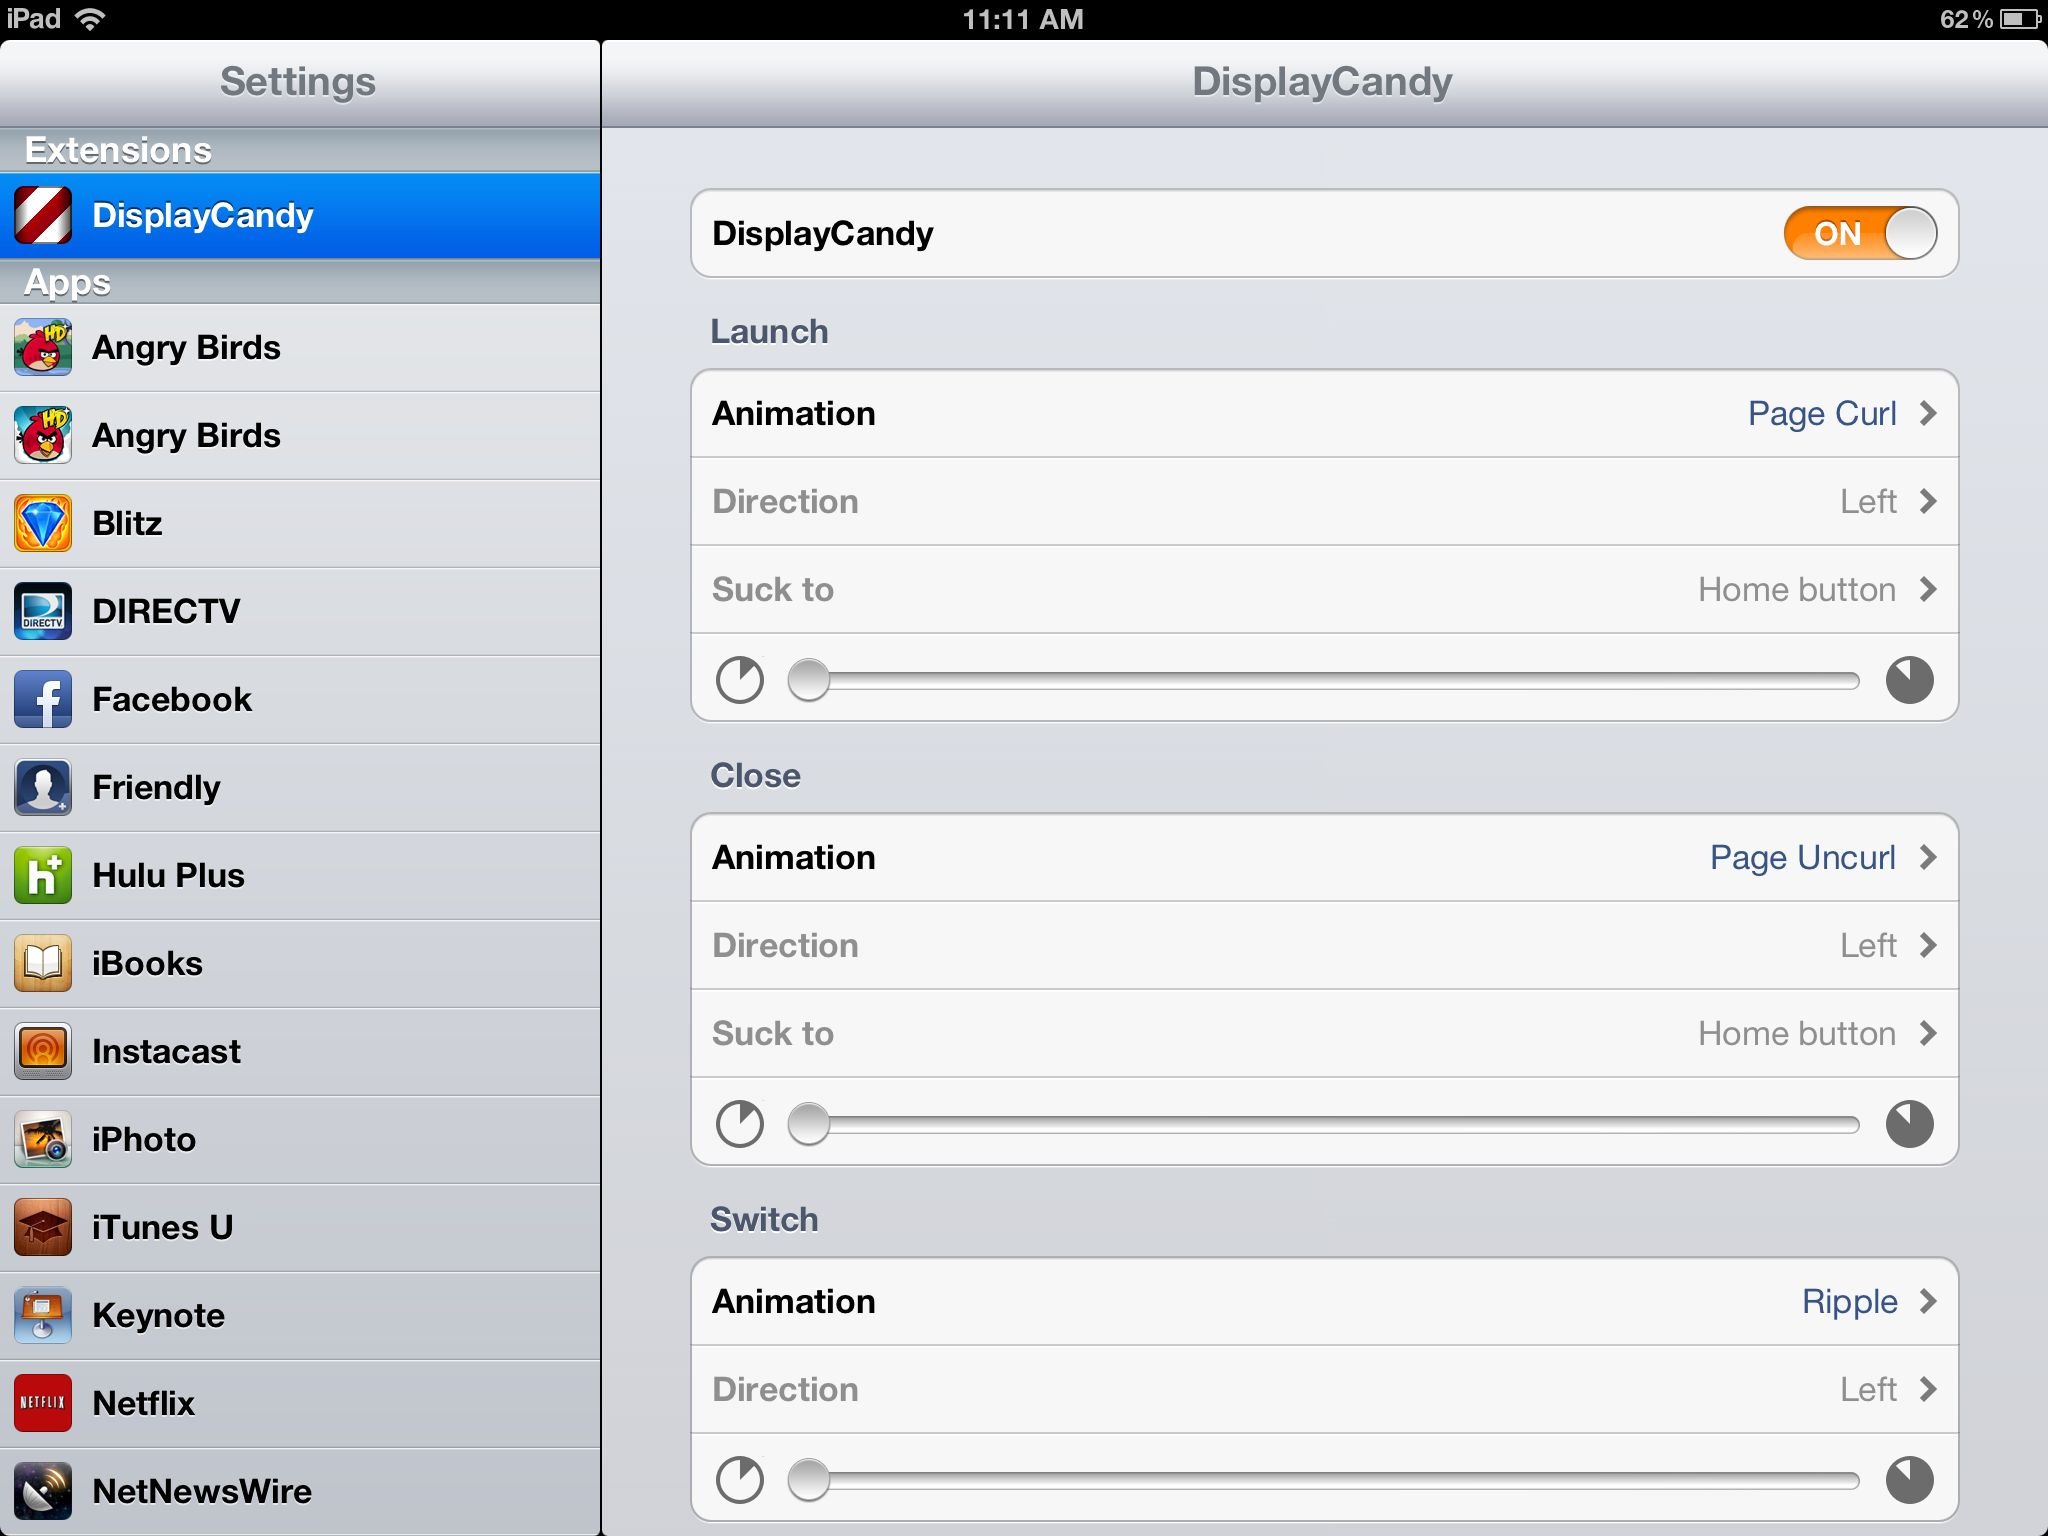 DisplayCandy settings on iPad